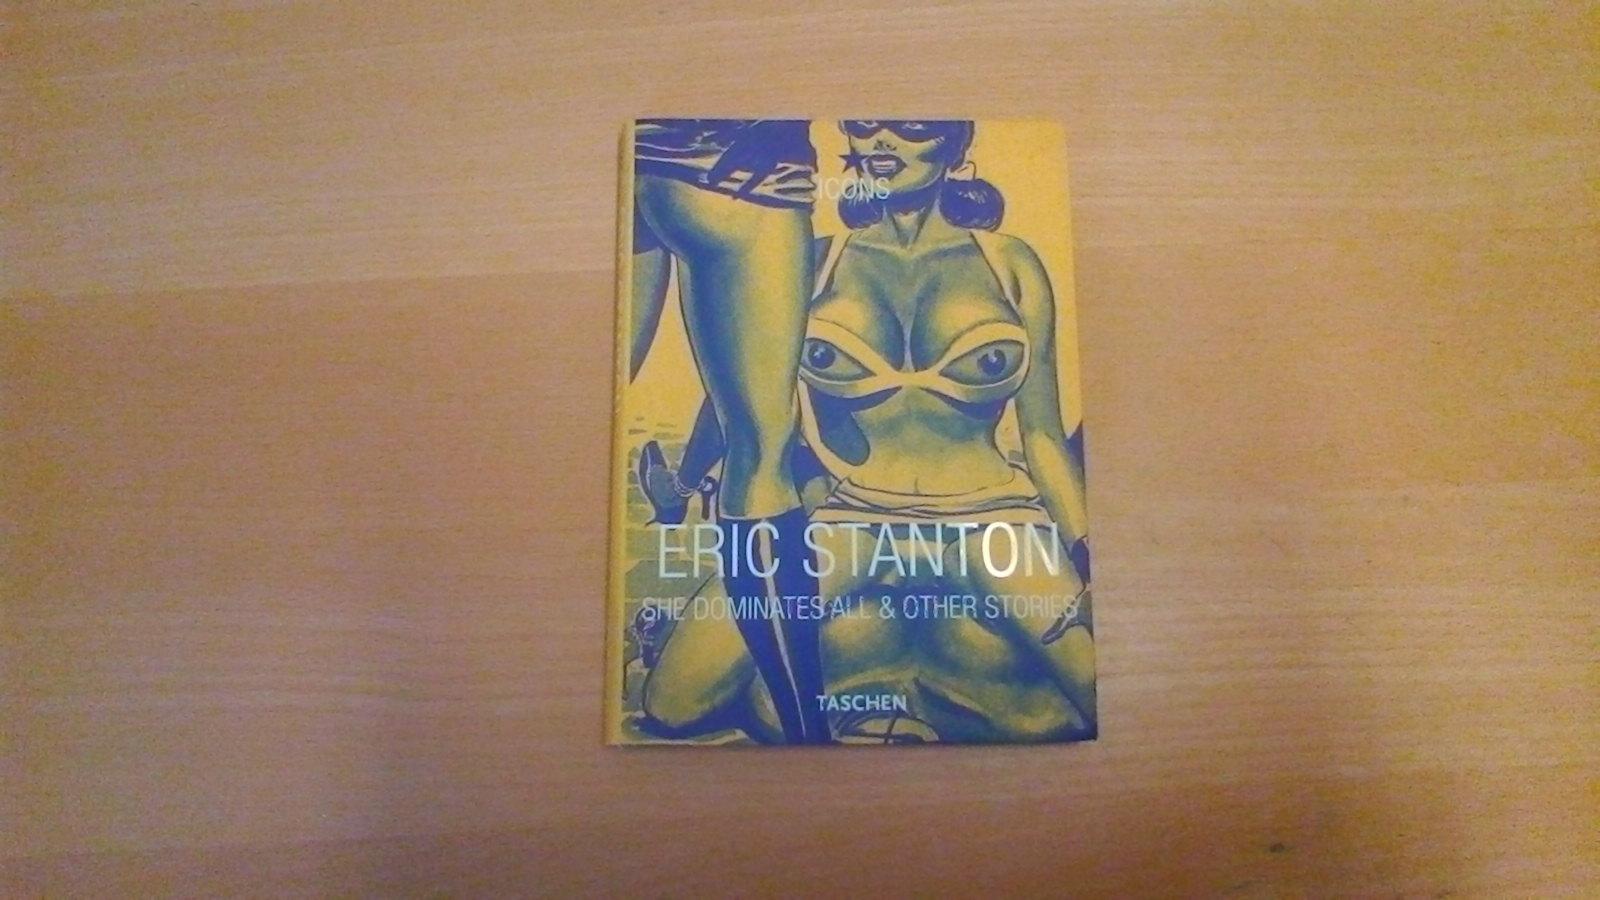 Eric Stanton - She dominates all et other stories - Stanton Eric